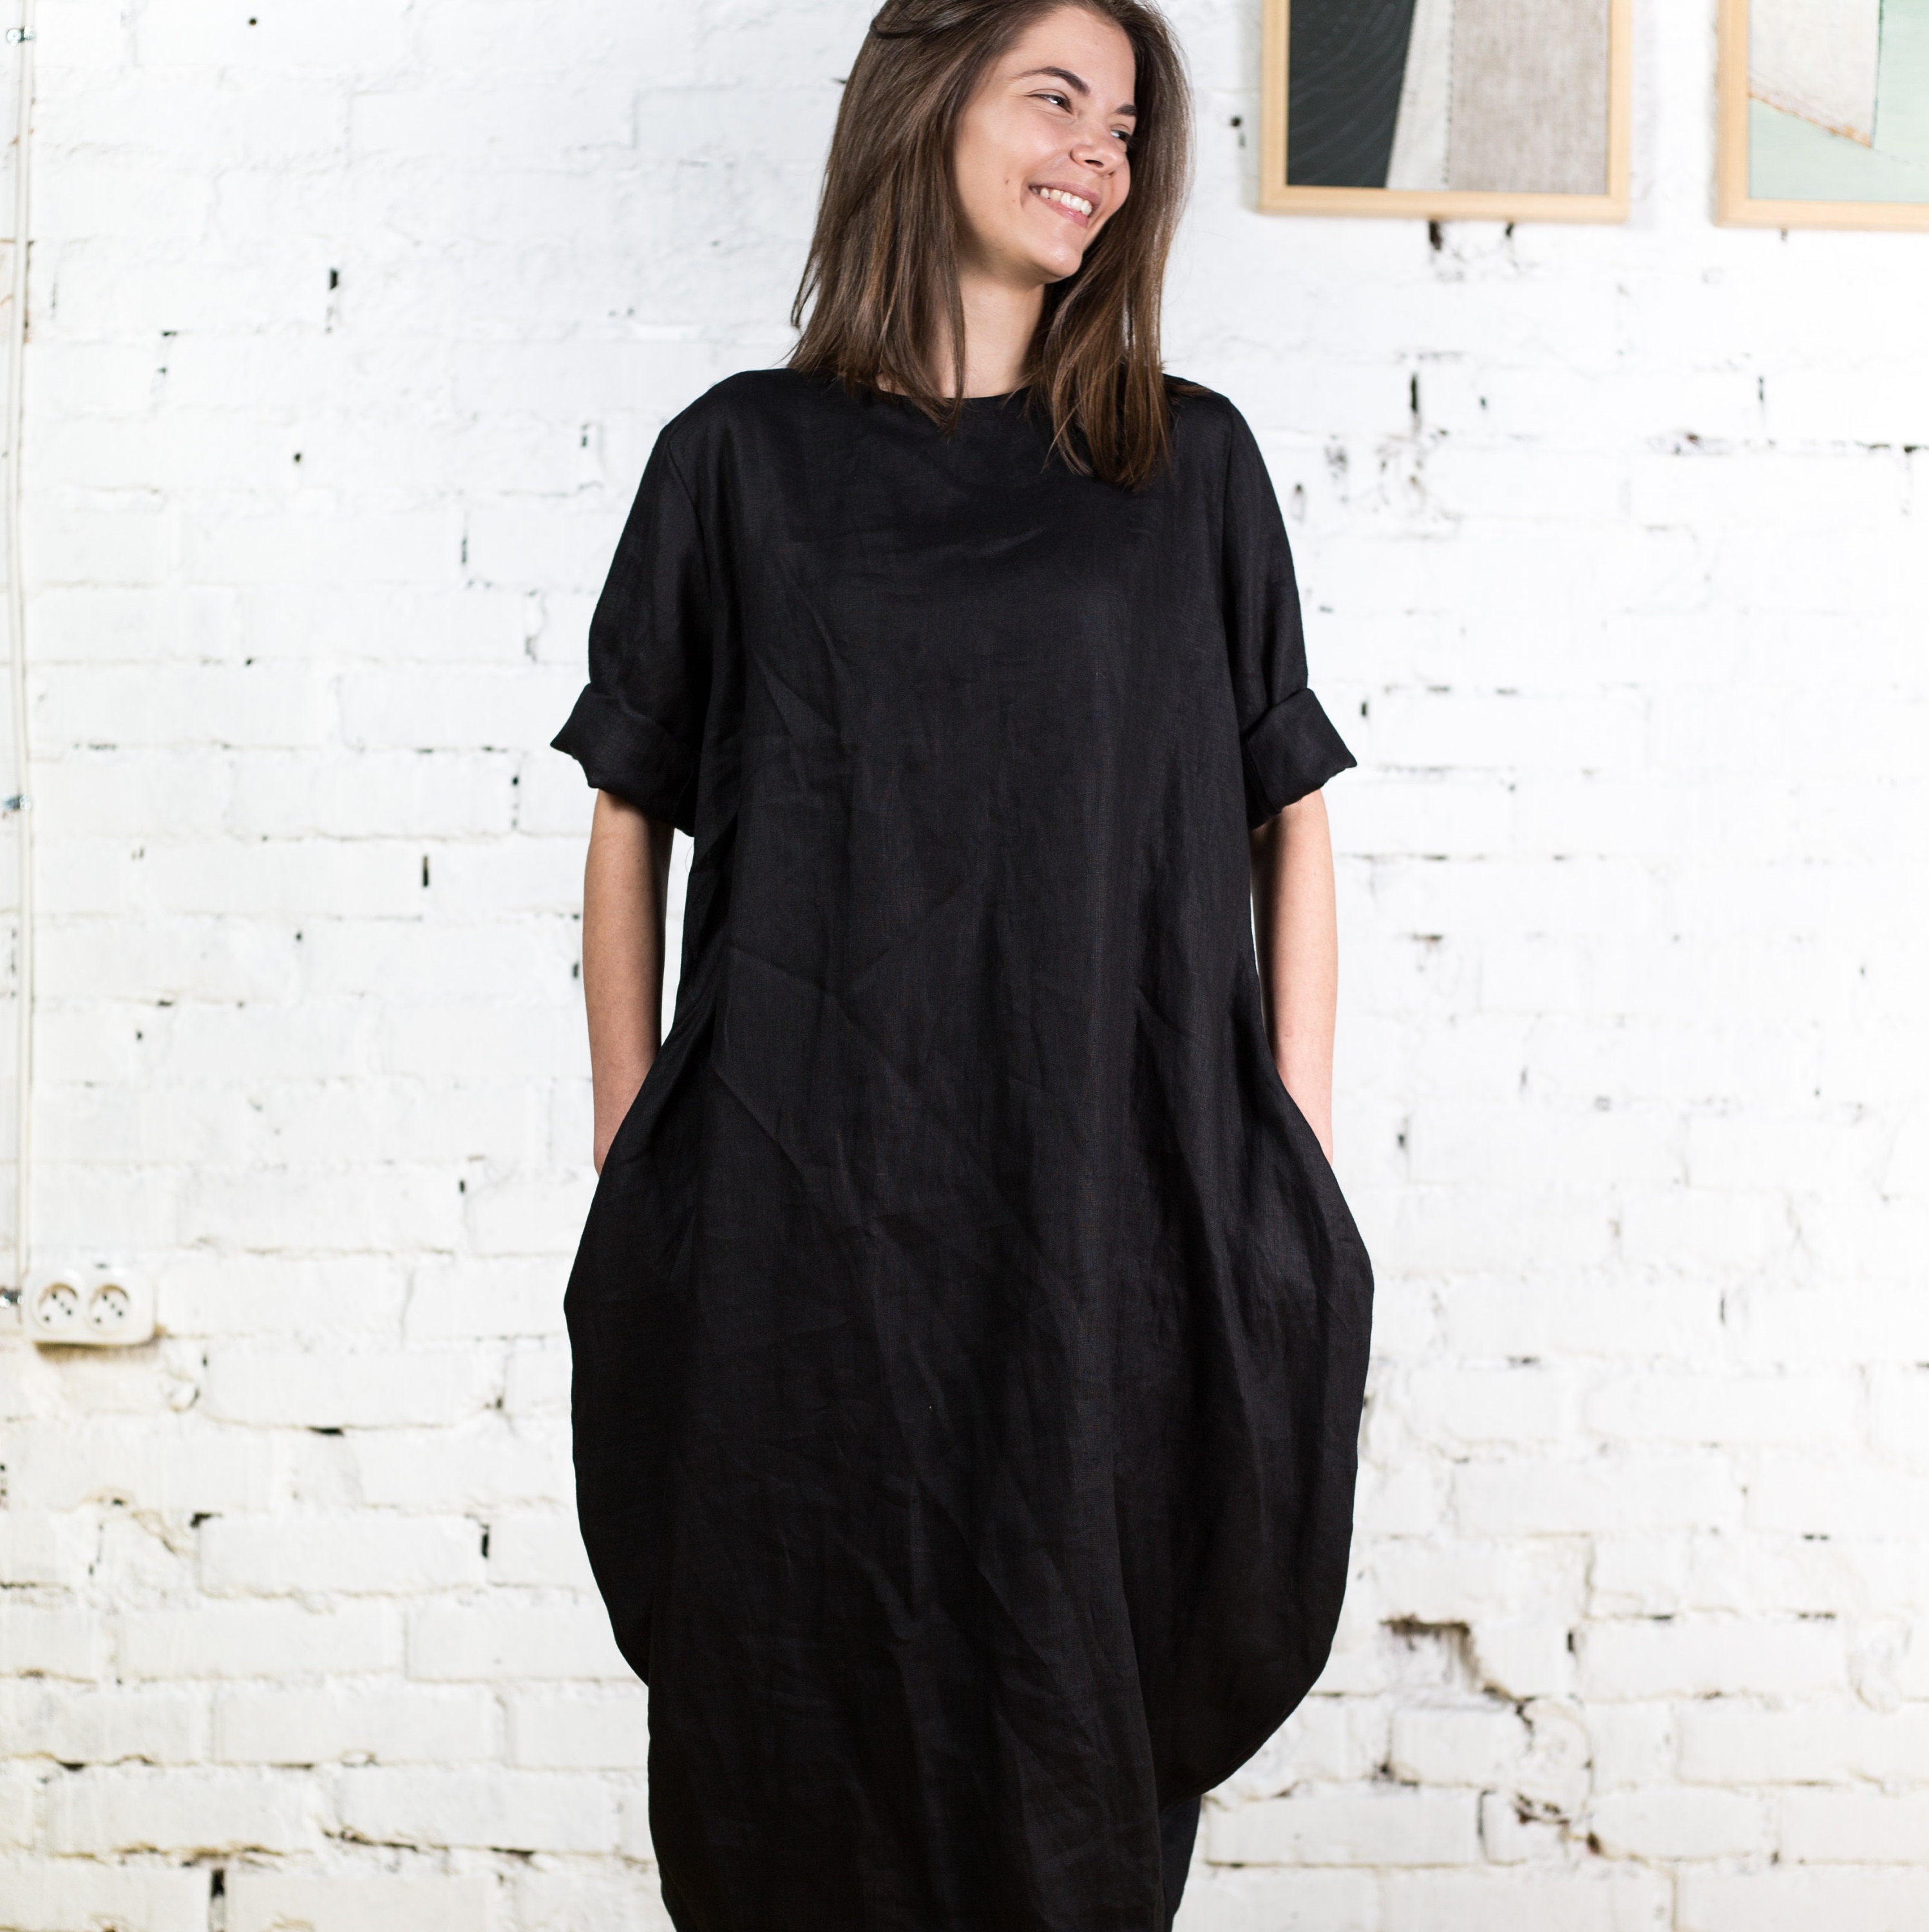 Dress With Pockets ANNA Black Maxi Dress Black Wrap Dress - Etsy